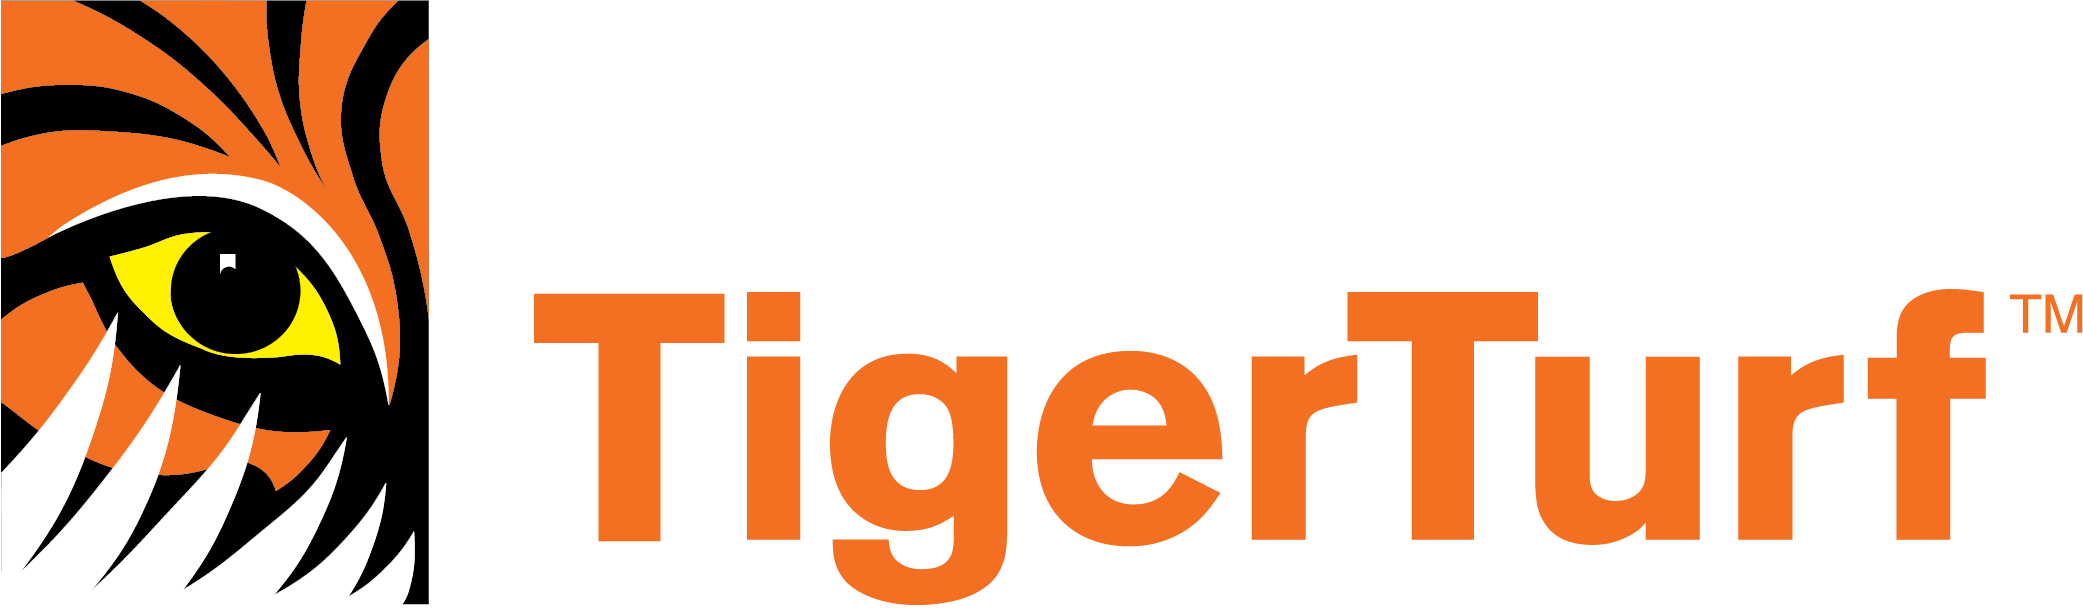 TigerTurf